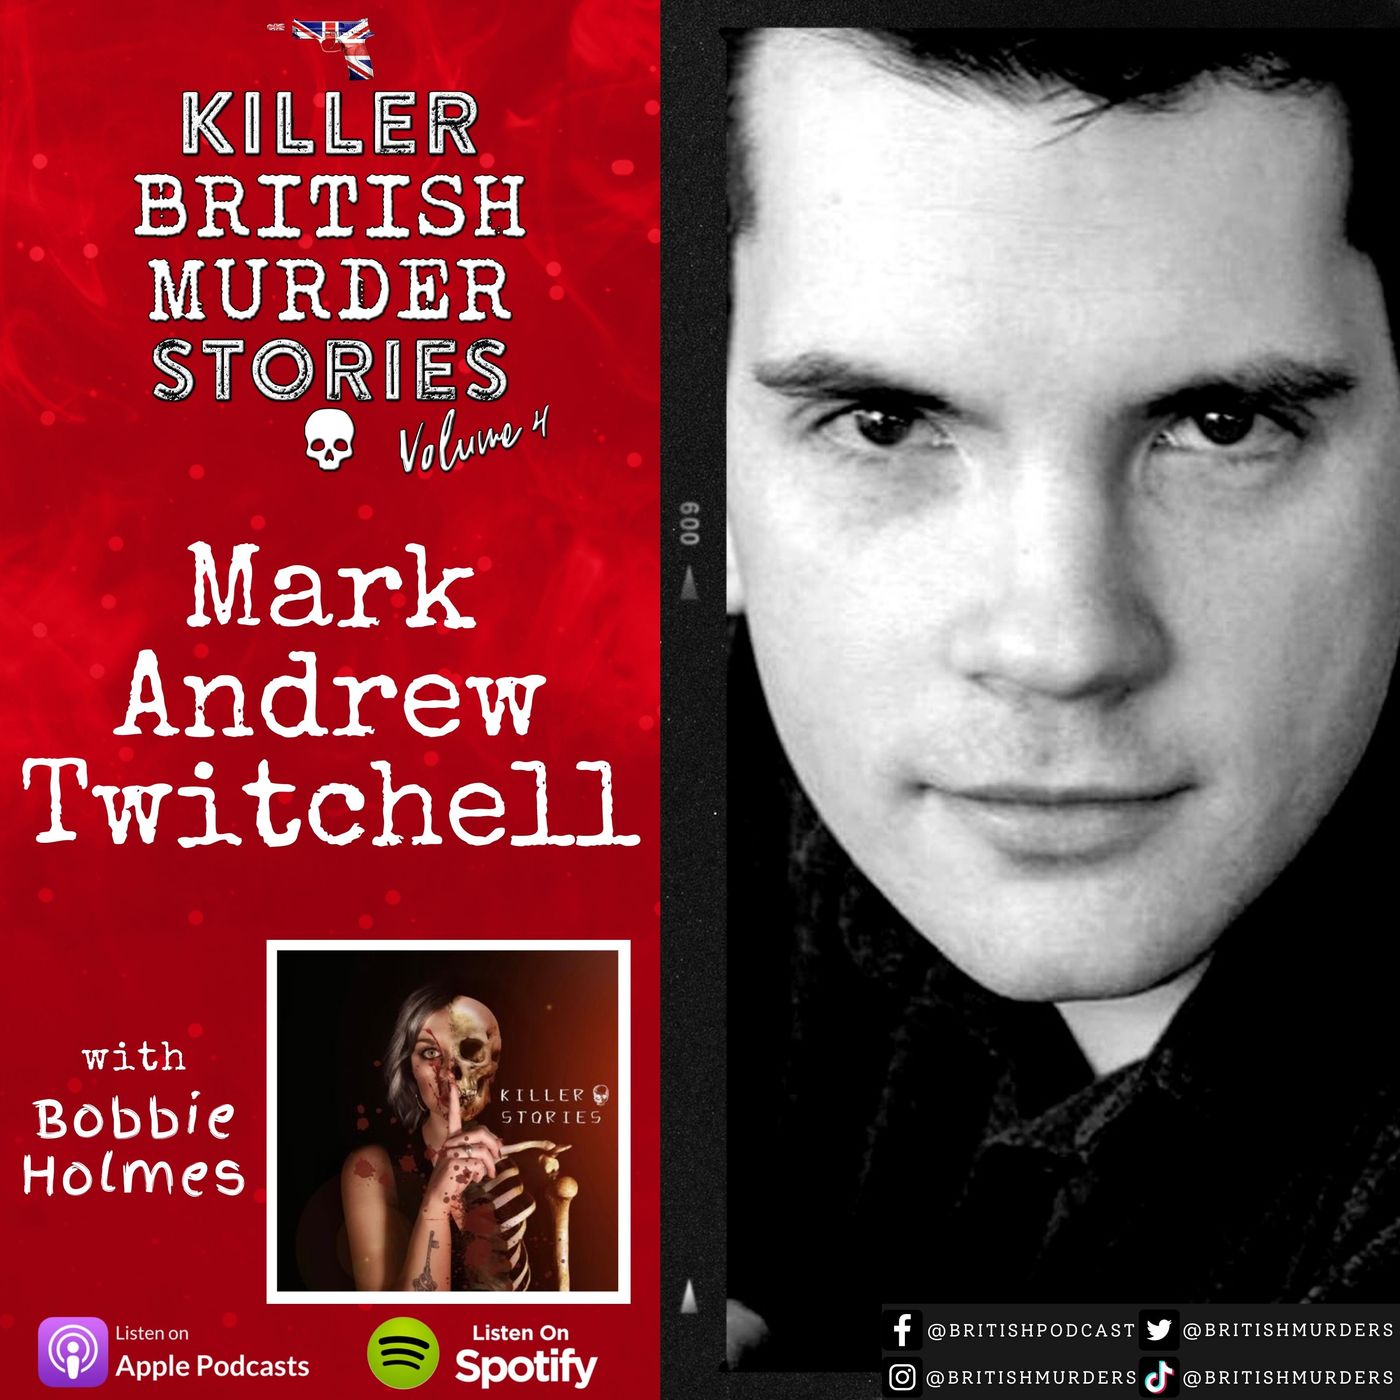 "The 'Dexter' Copycat Killer" Mark Andrew Twitchell | Killer British Murder Stories Vol. 4 Feat. Bobbie Holmes Image